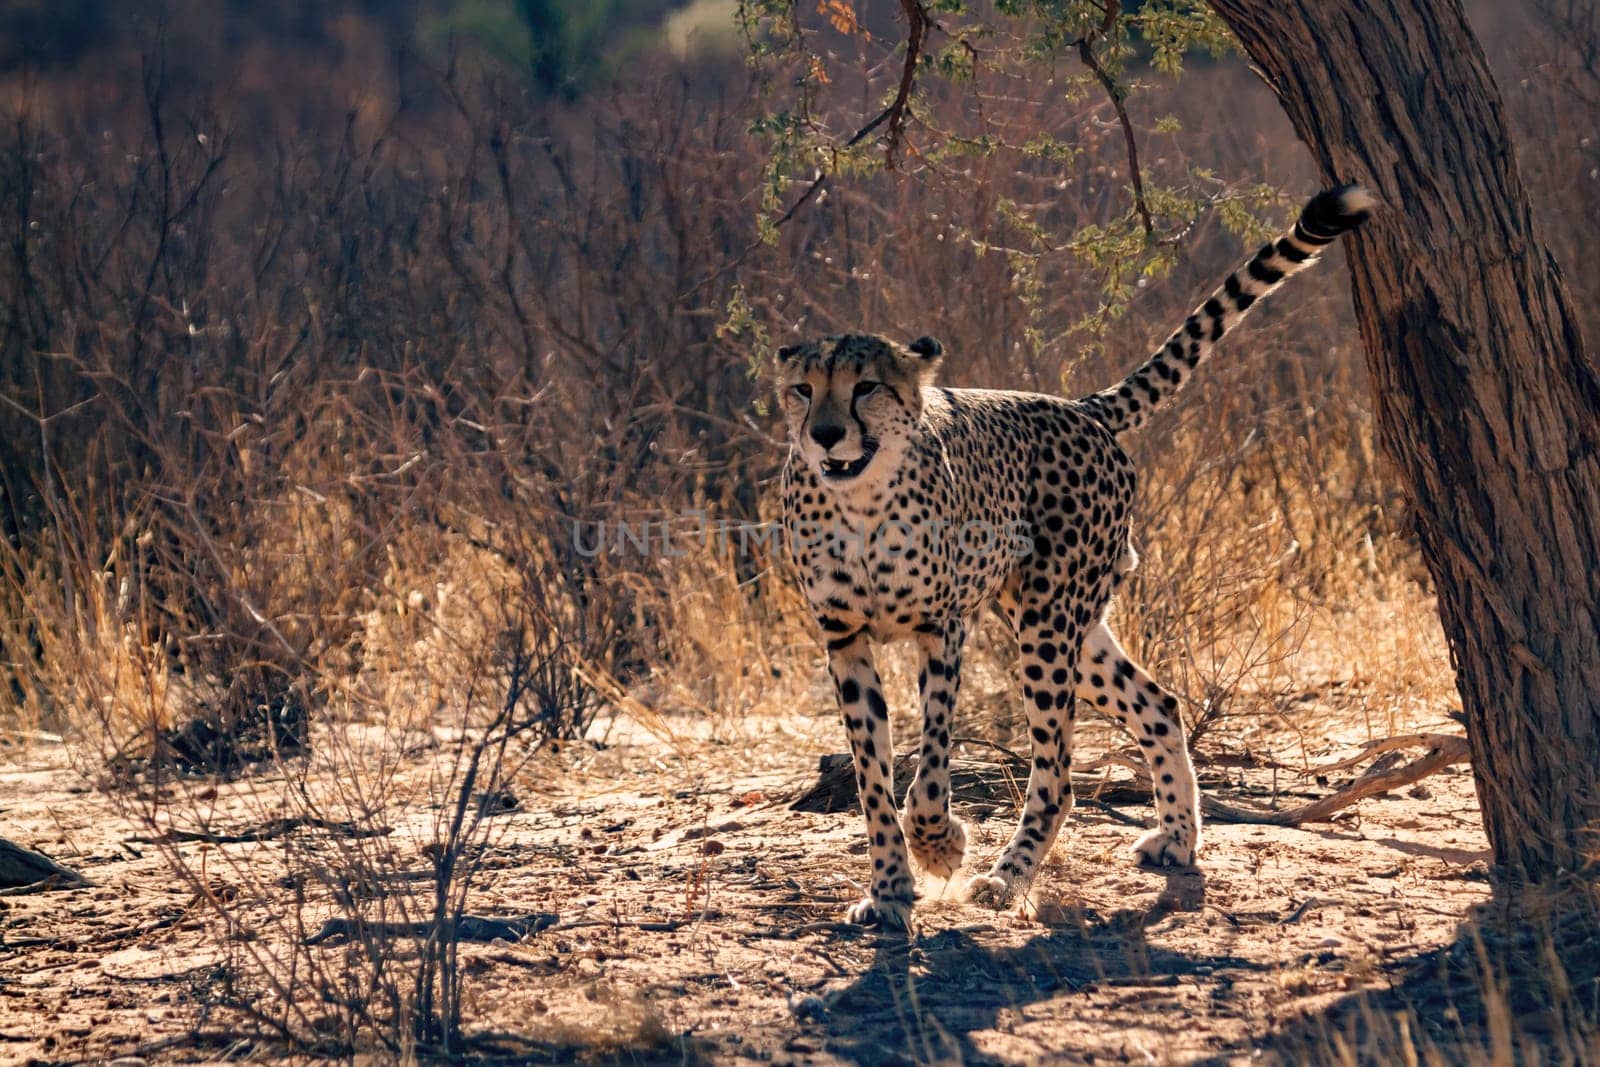 Cheetah stalking front view in Kgalagadi transfrontier park, South Africa ; Specie Acinonyx jubatus family of Felidae